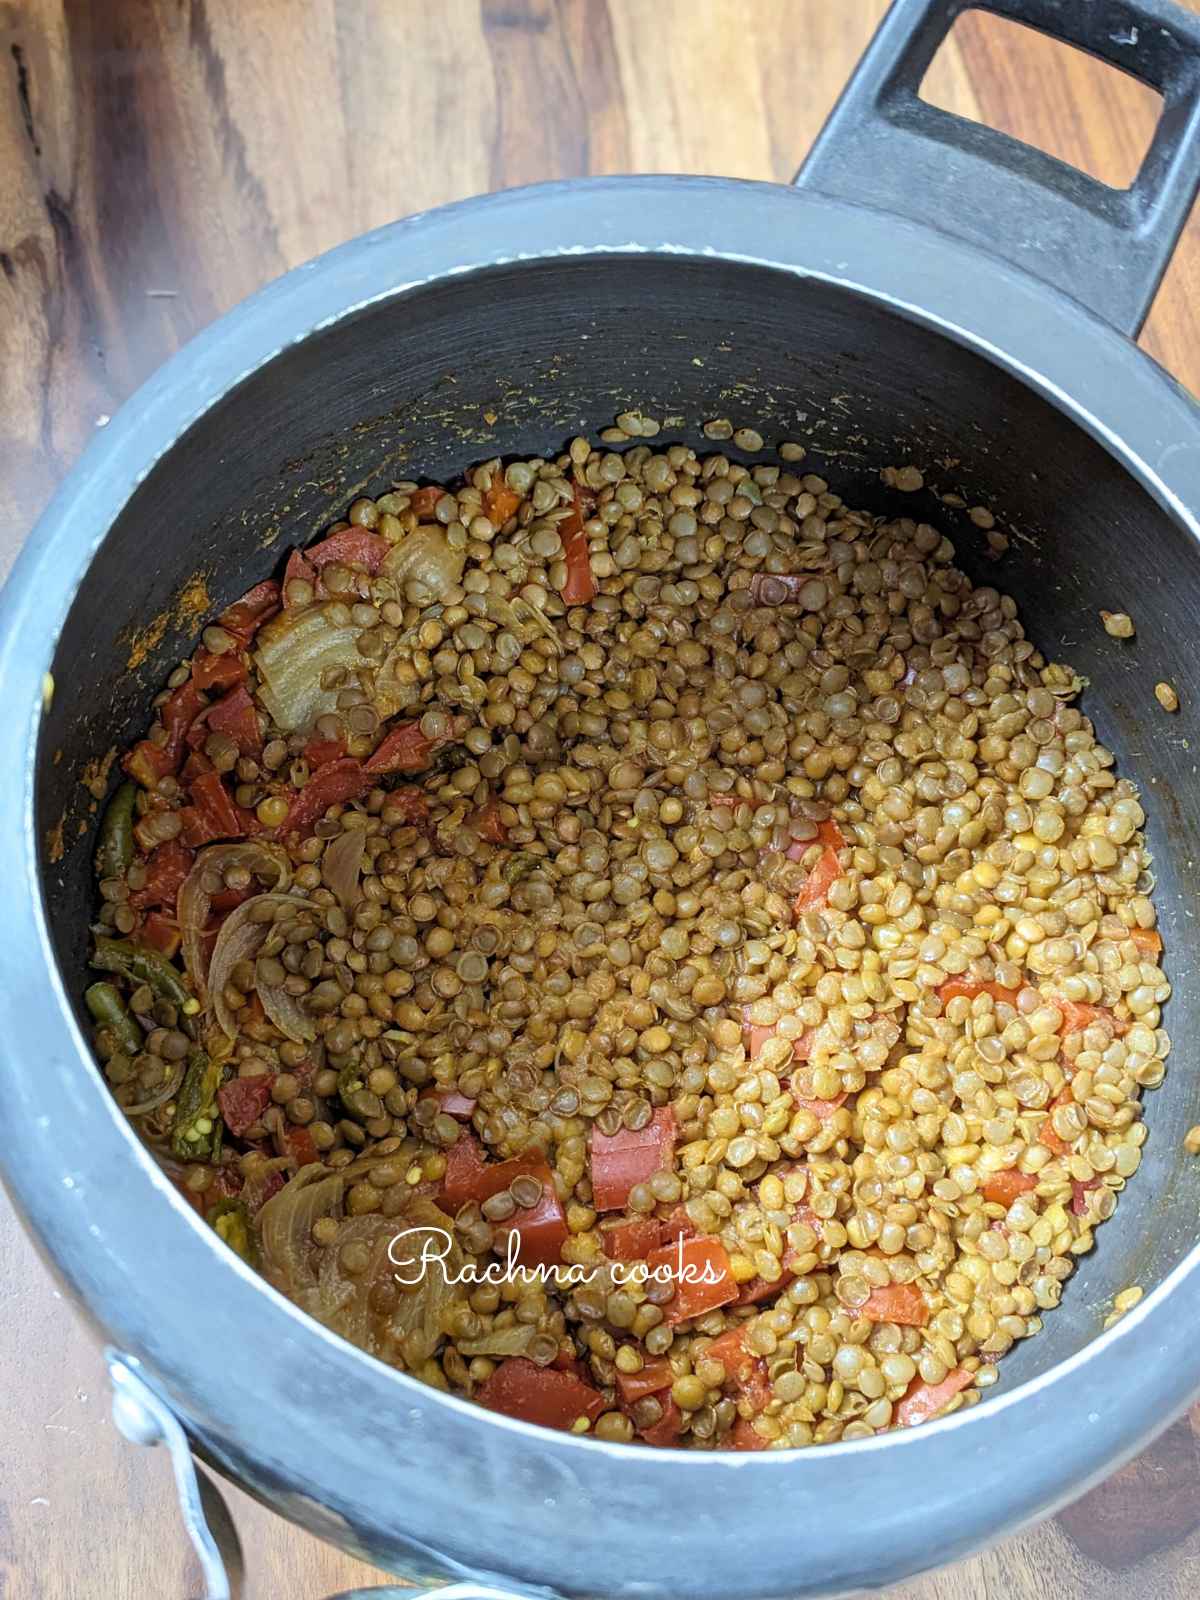 Brown lentils after cooking in pressure cooker.